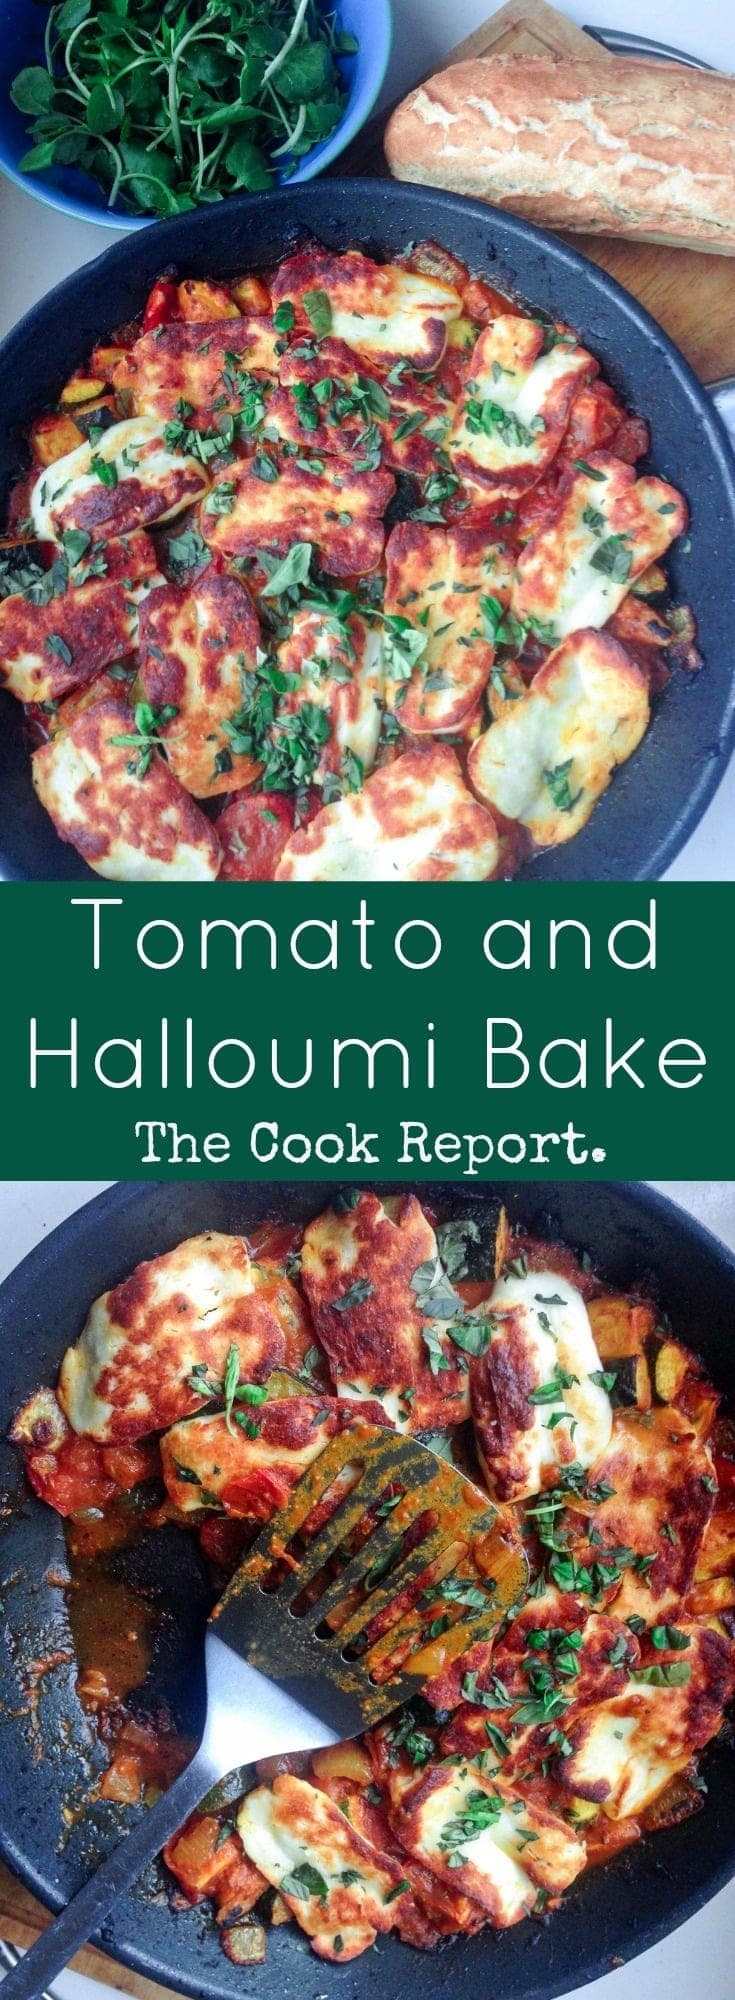 Tomato and Halloumi Bake with Courgette • Halloumi Recipe • The Cook Report